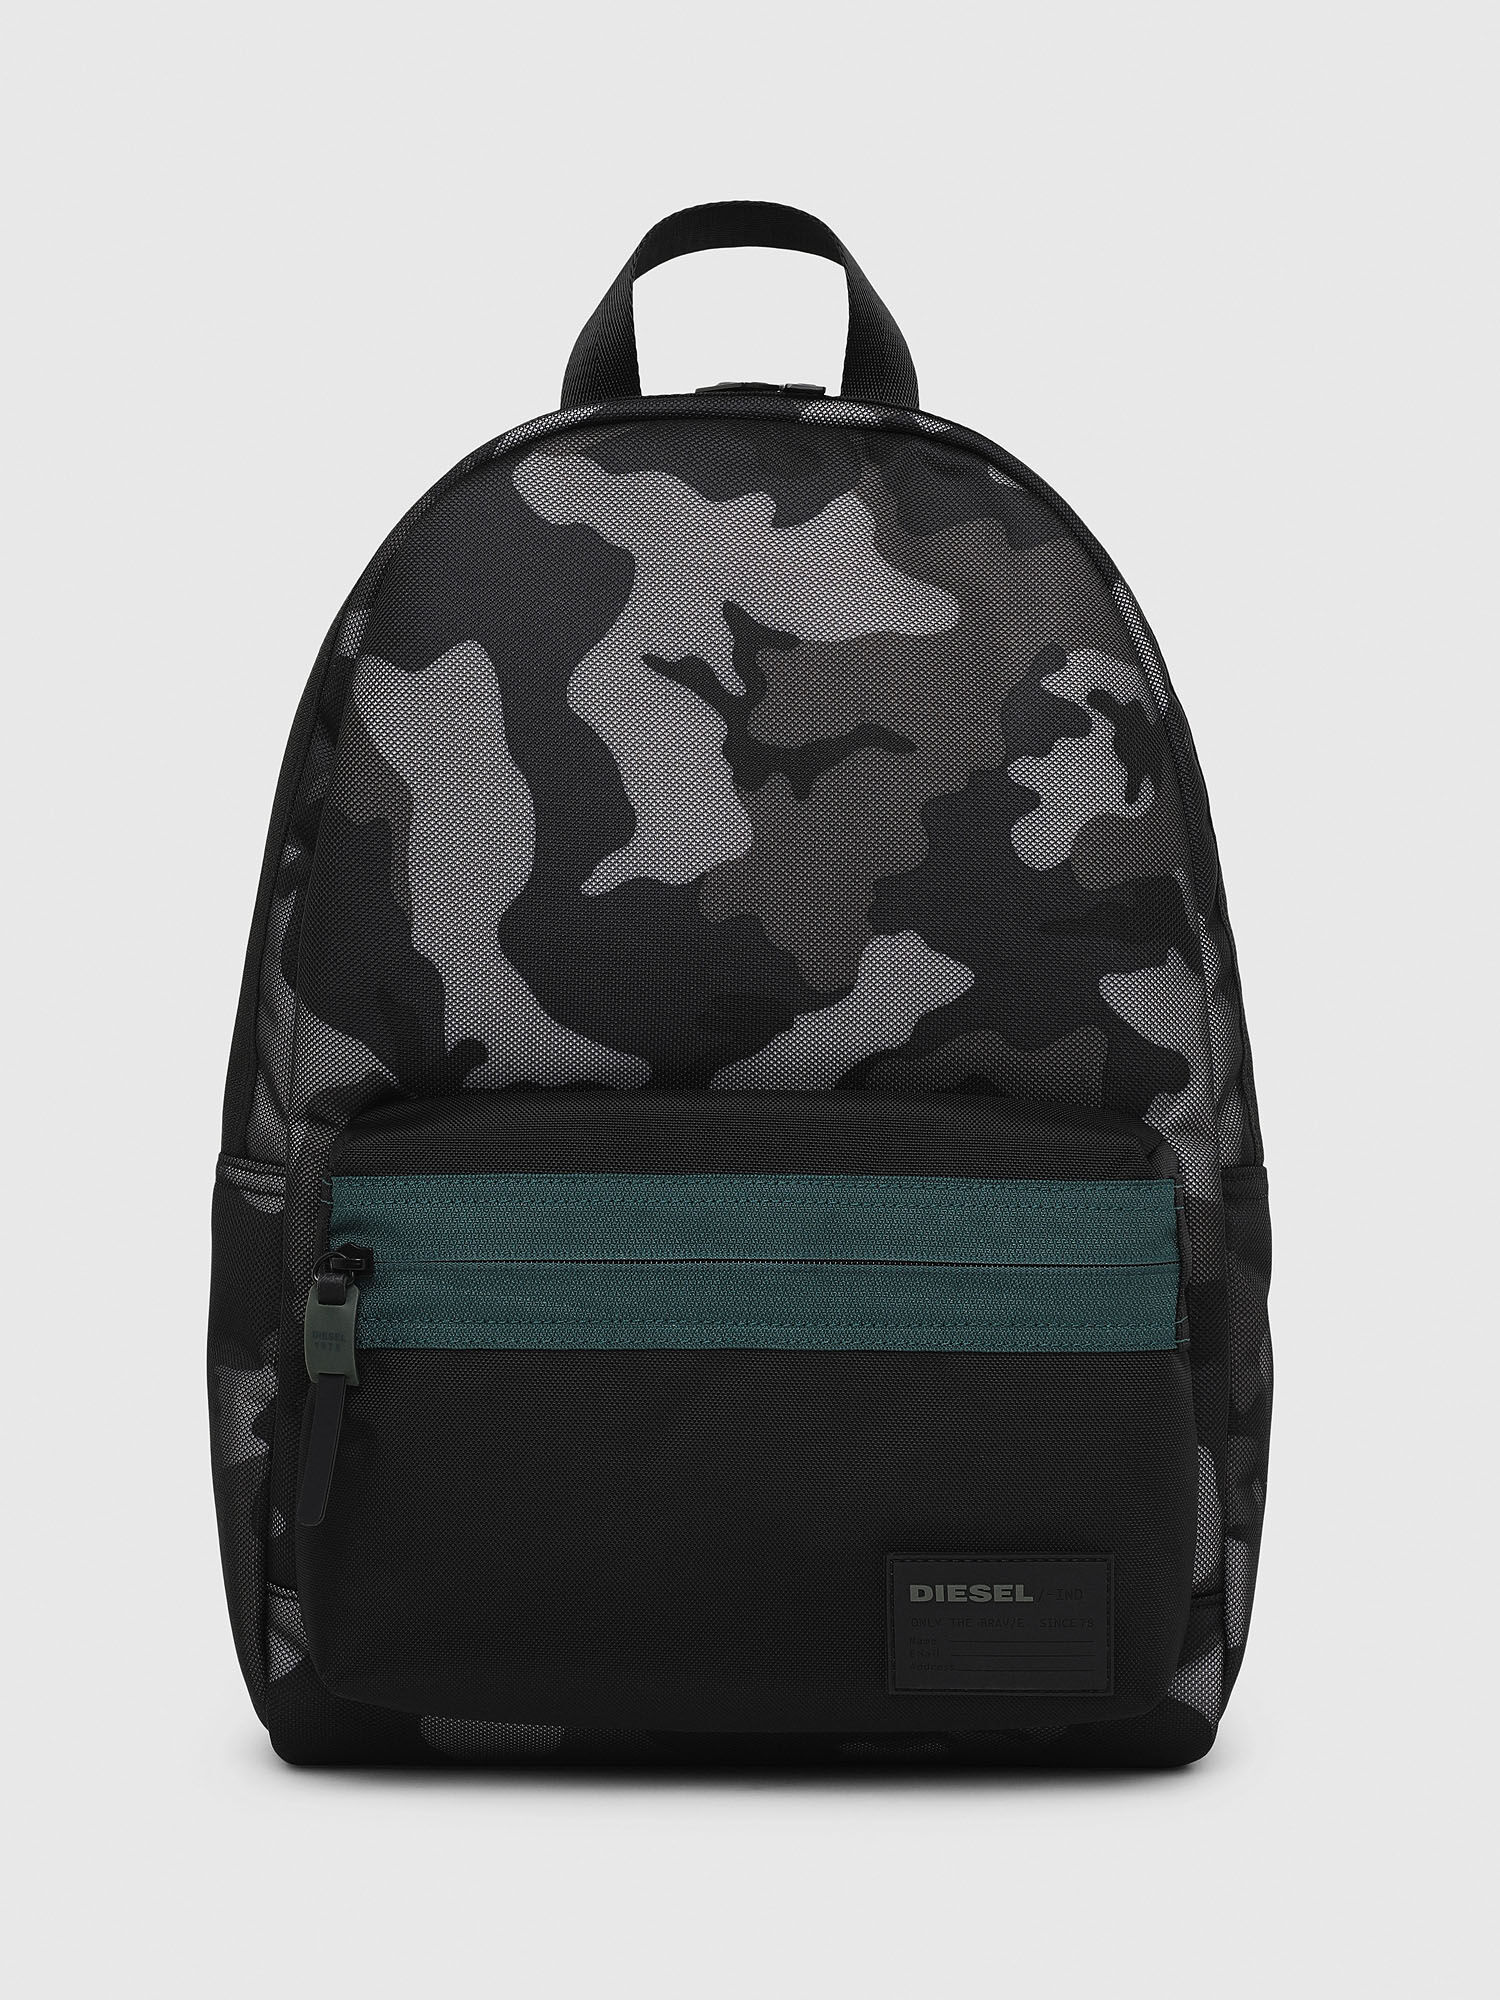 MIRANO Man: Backpack in camo-print mesh | Diesel